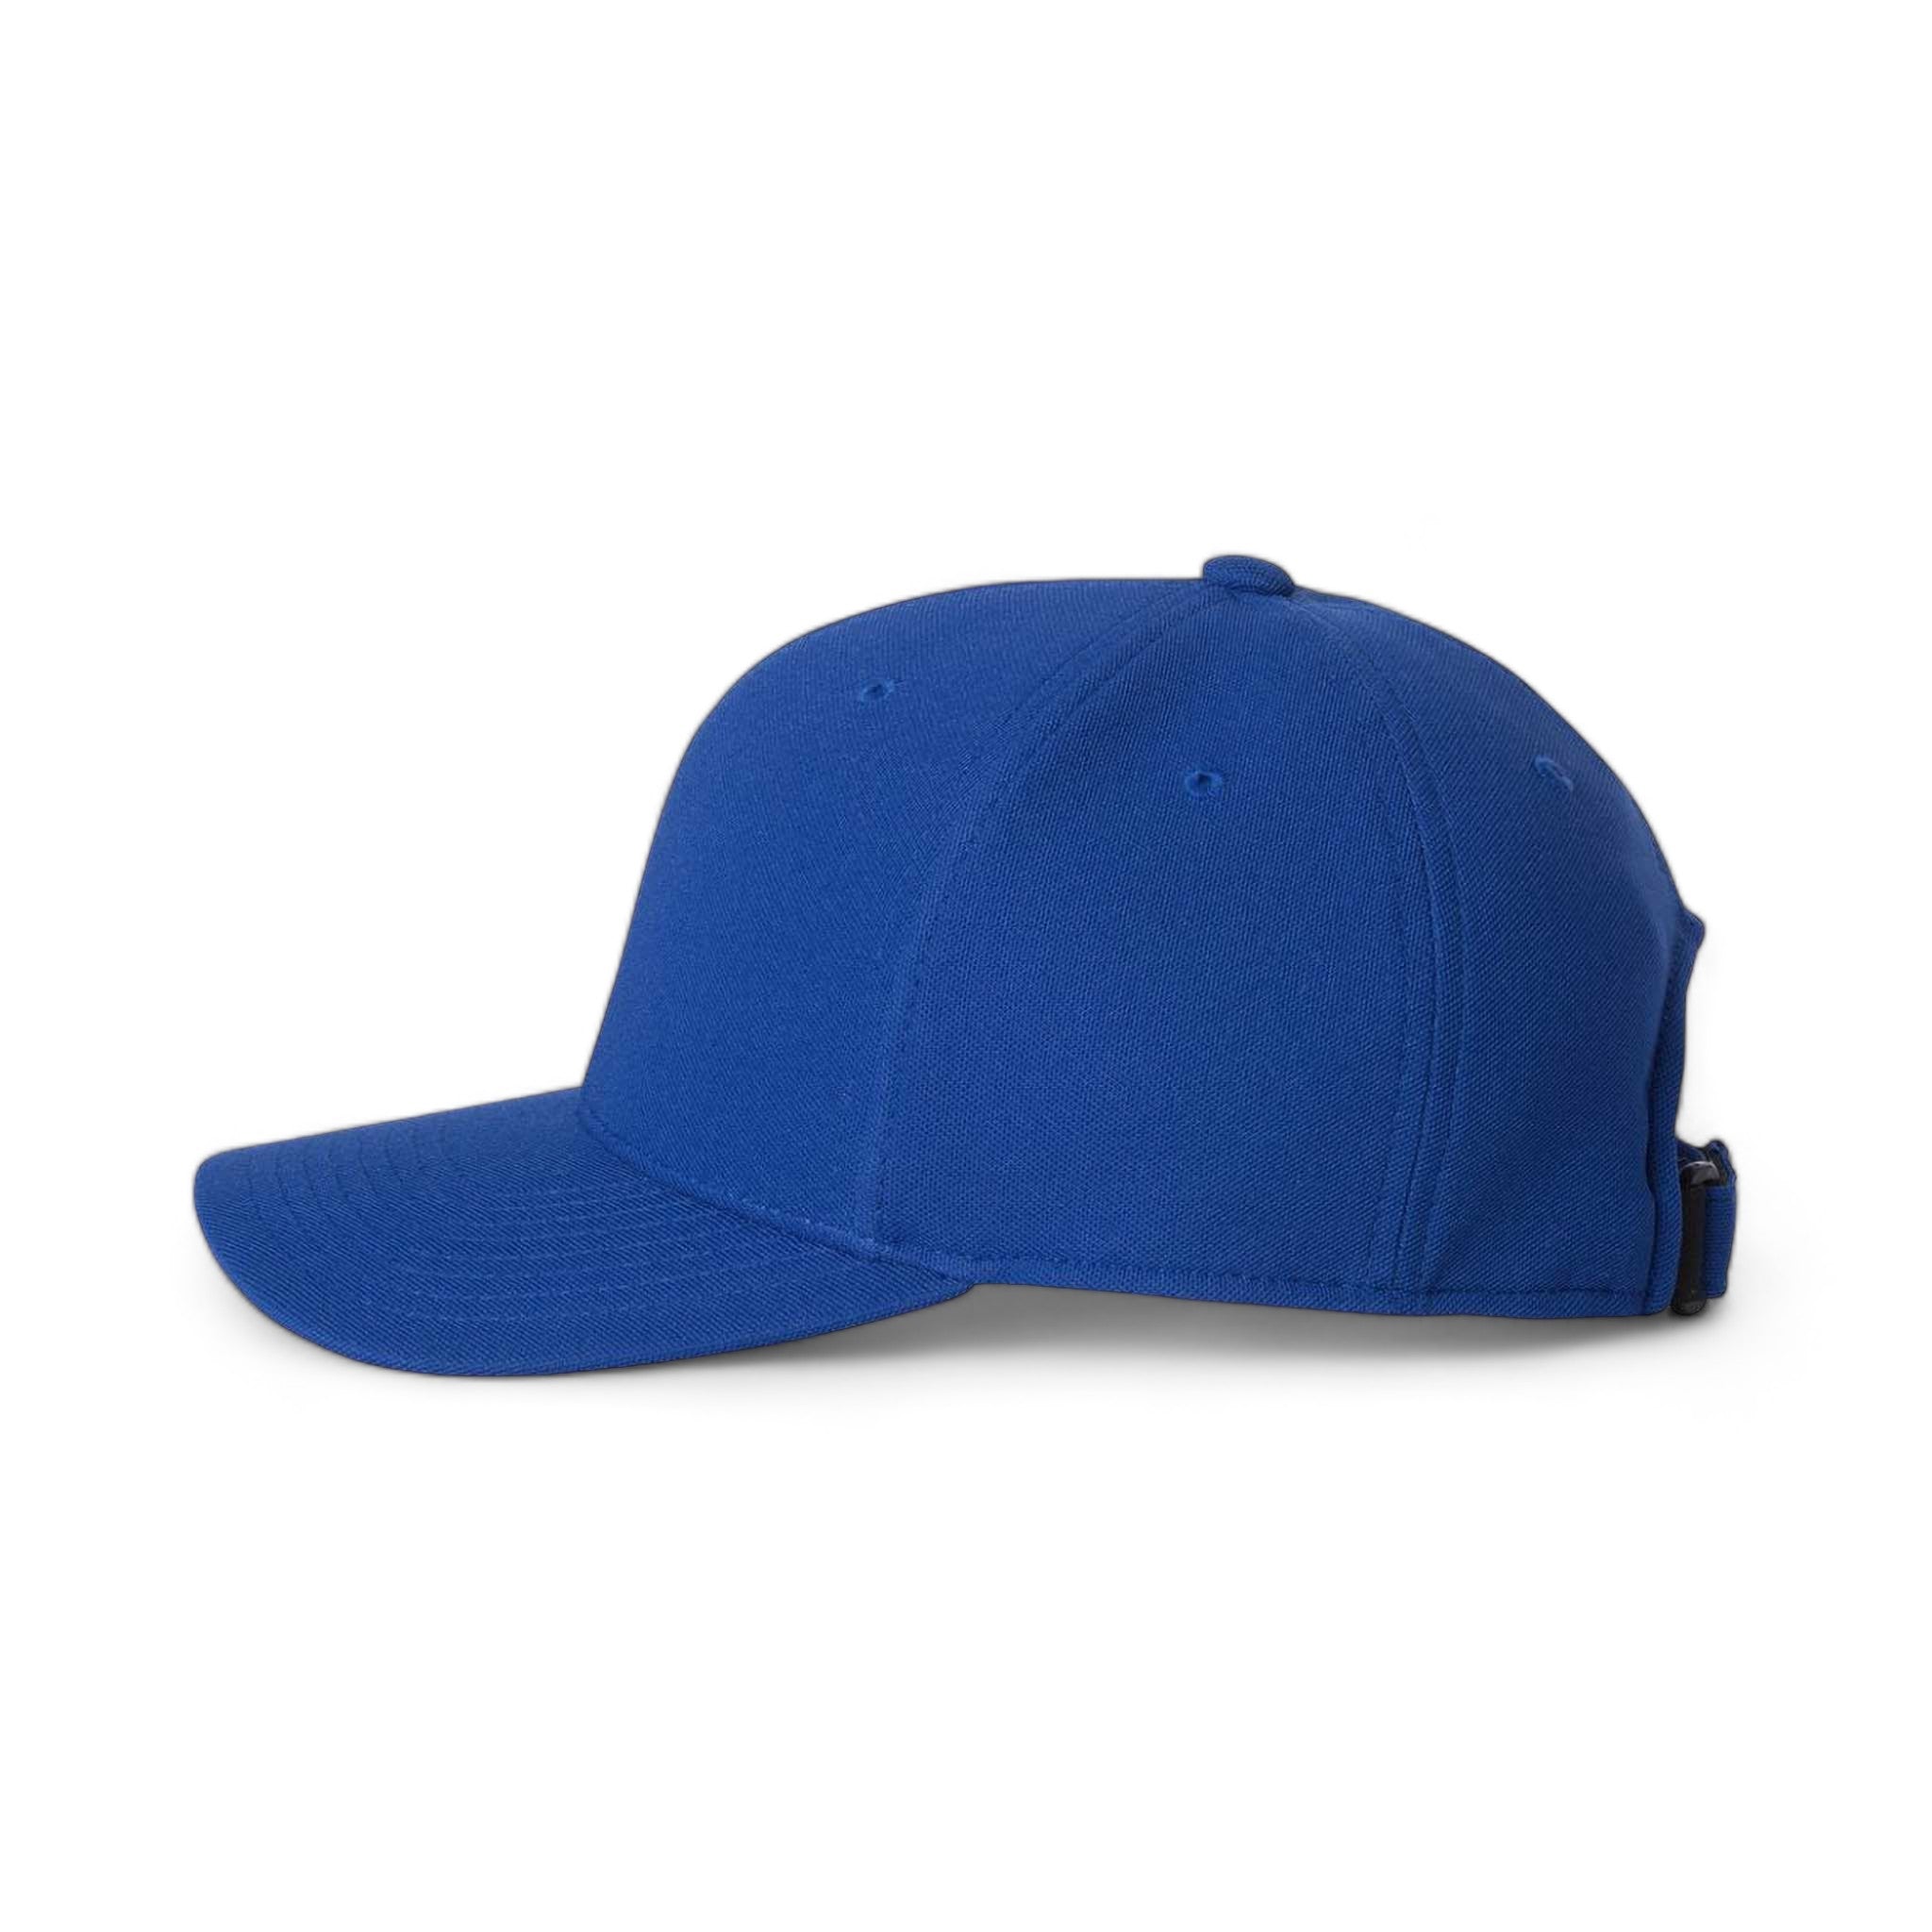 Side view of Flexfit 110P custom hat in royal blue